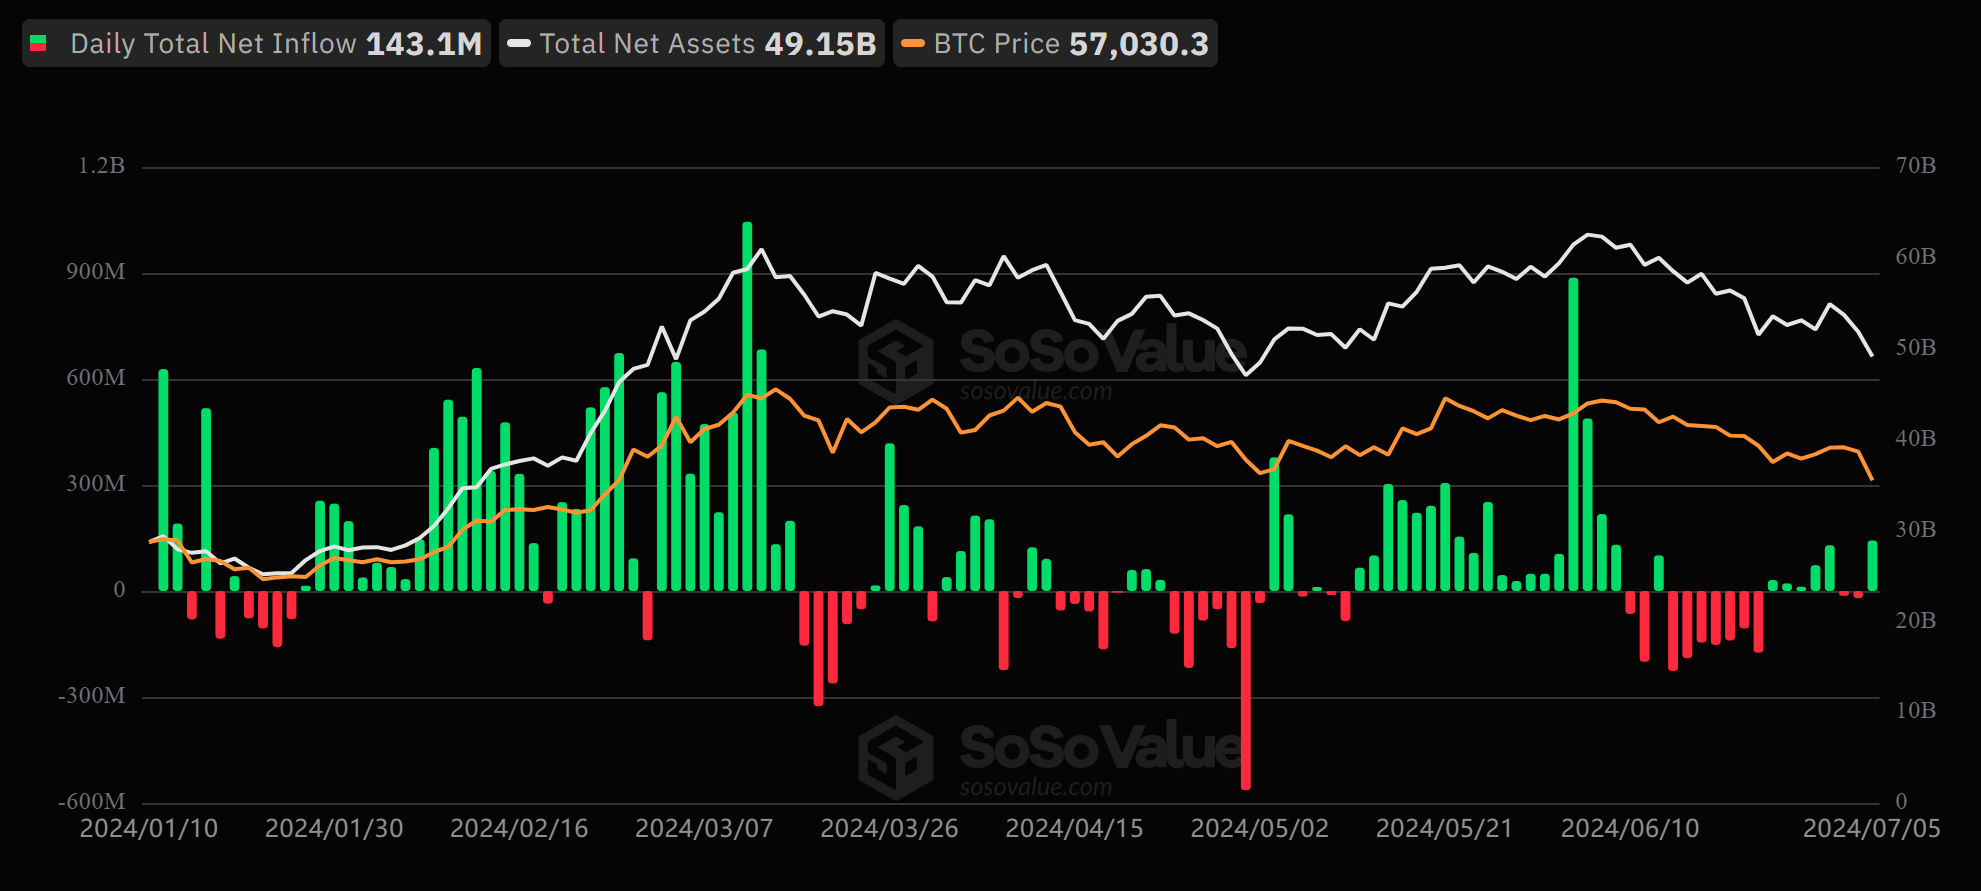 Investors Remain Bullish as US Bitcoin ETF Sees $143M Inflow, Highest Since June 6